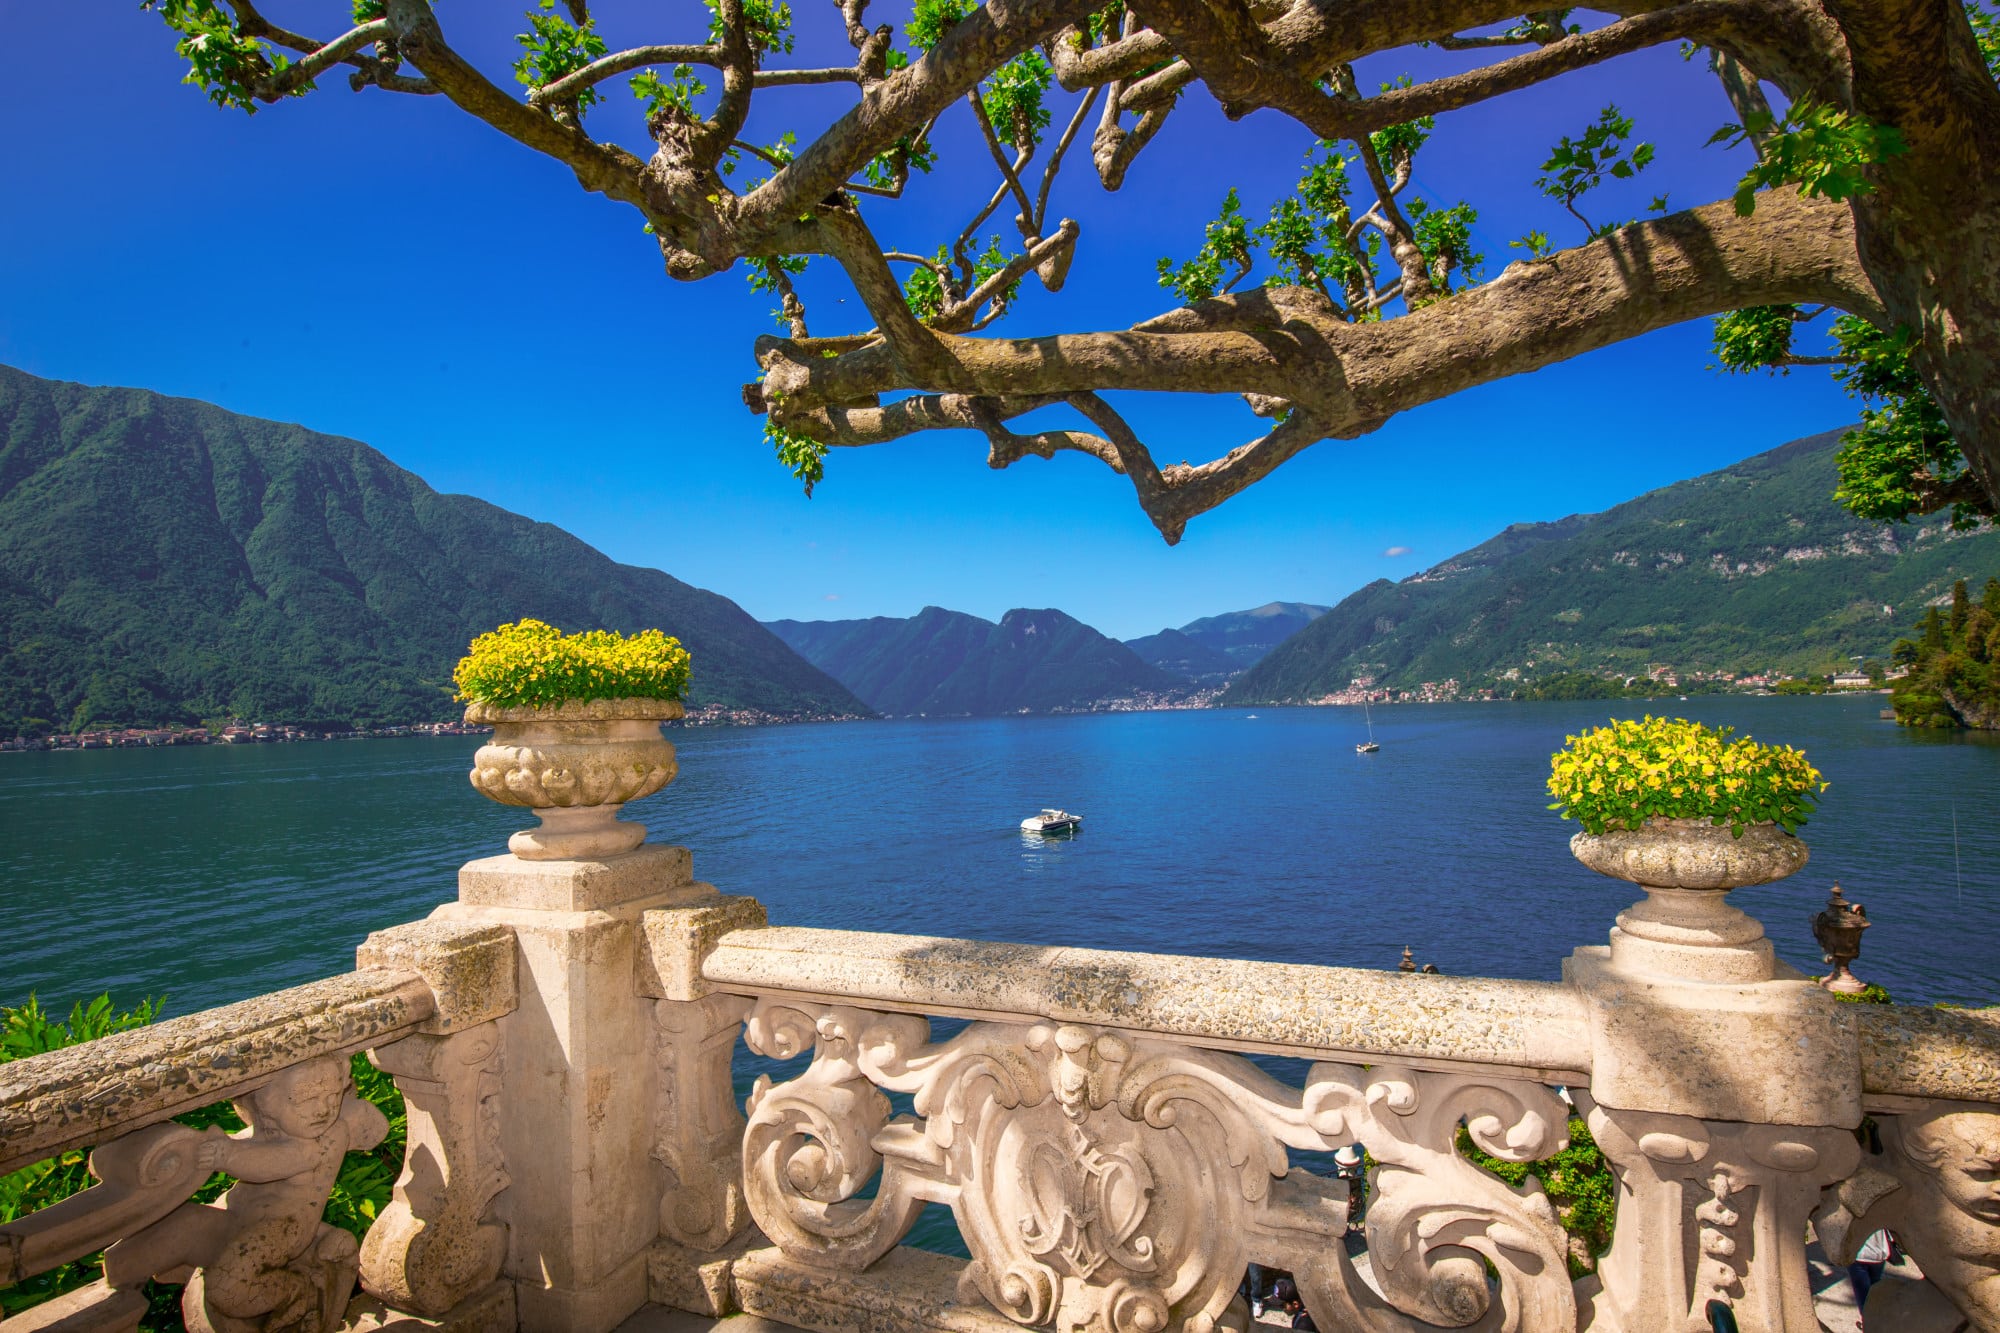 Beautiful view to lake Como from Villa Balbianello, Italy